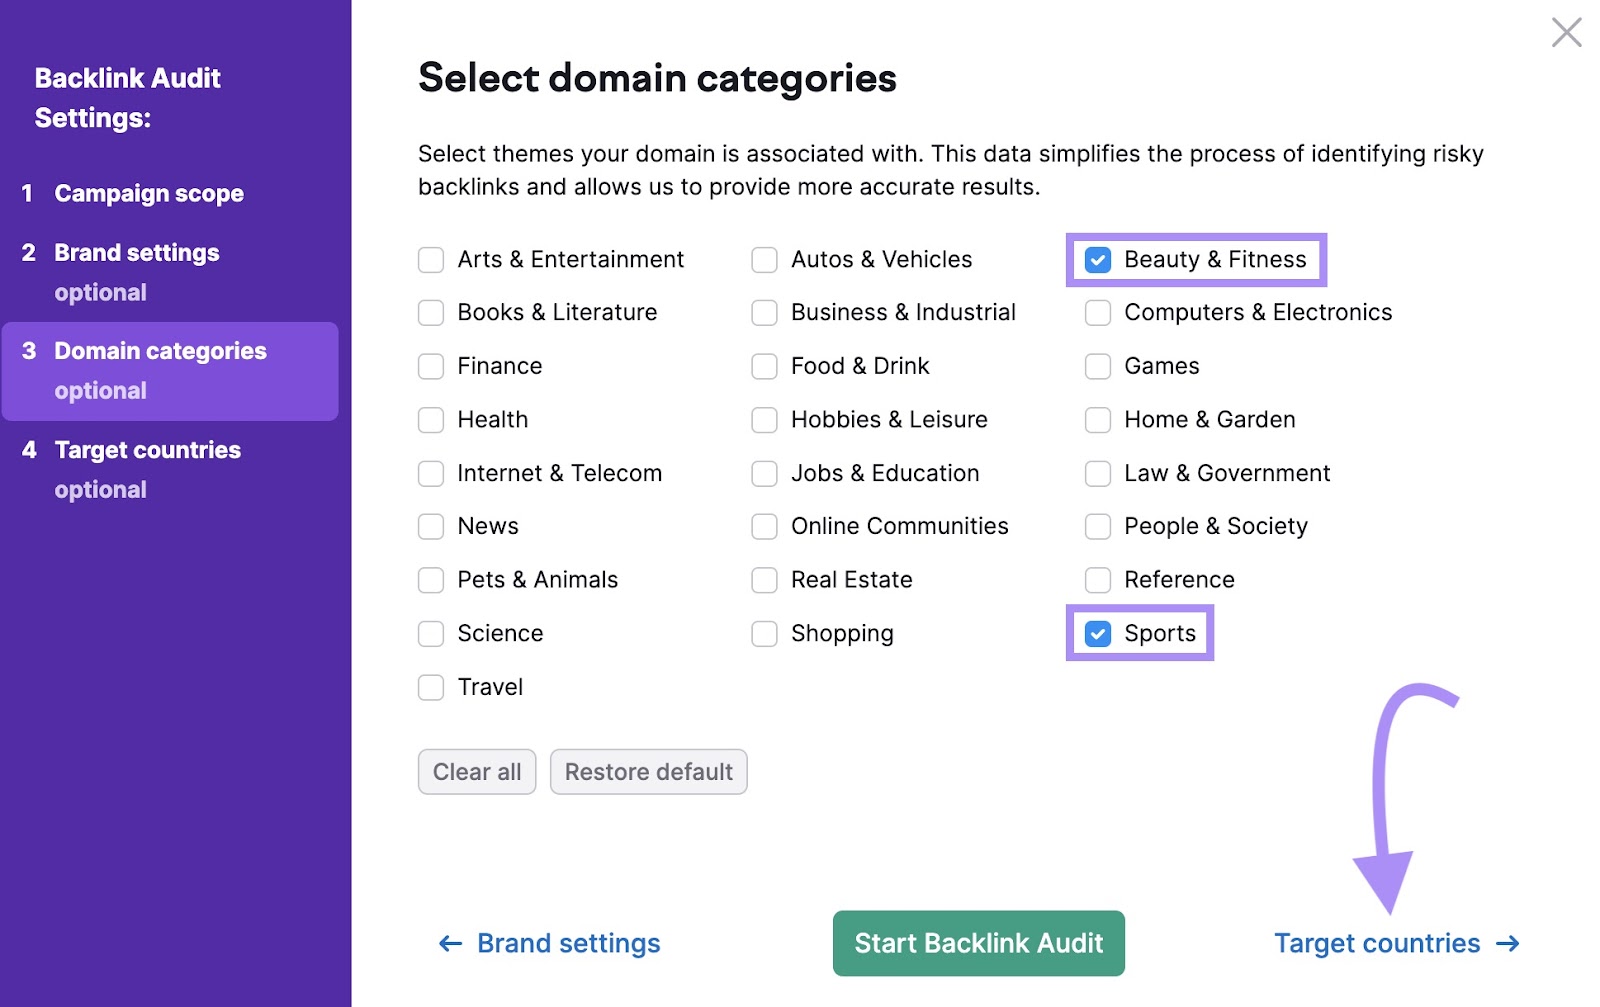 "Select domain categories" window in Backlink Audit settings